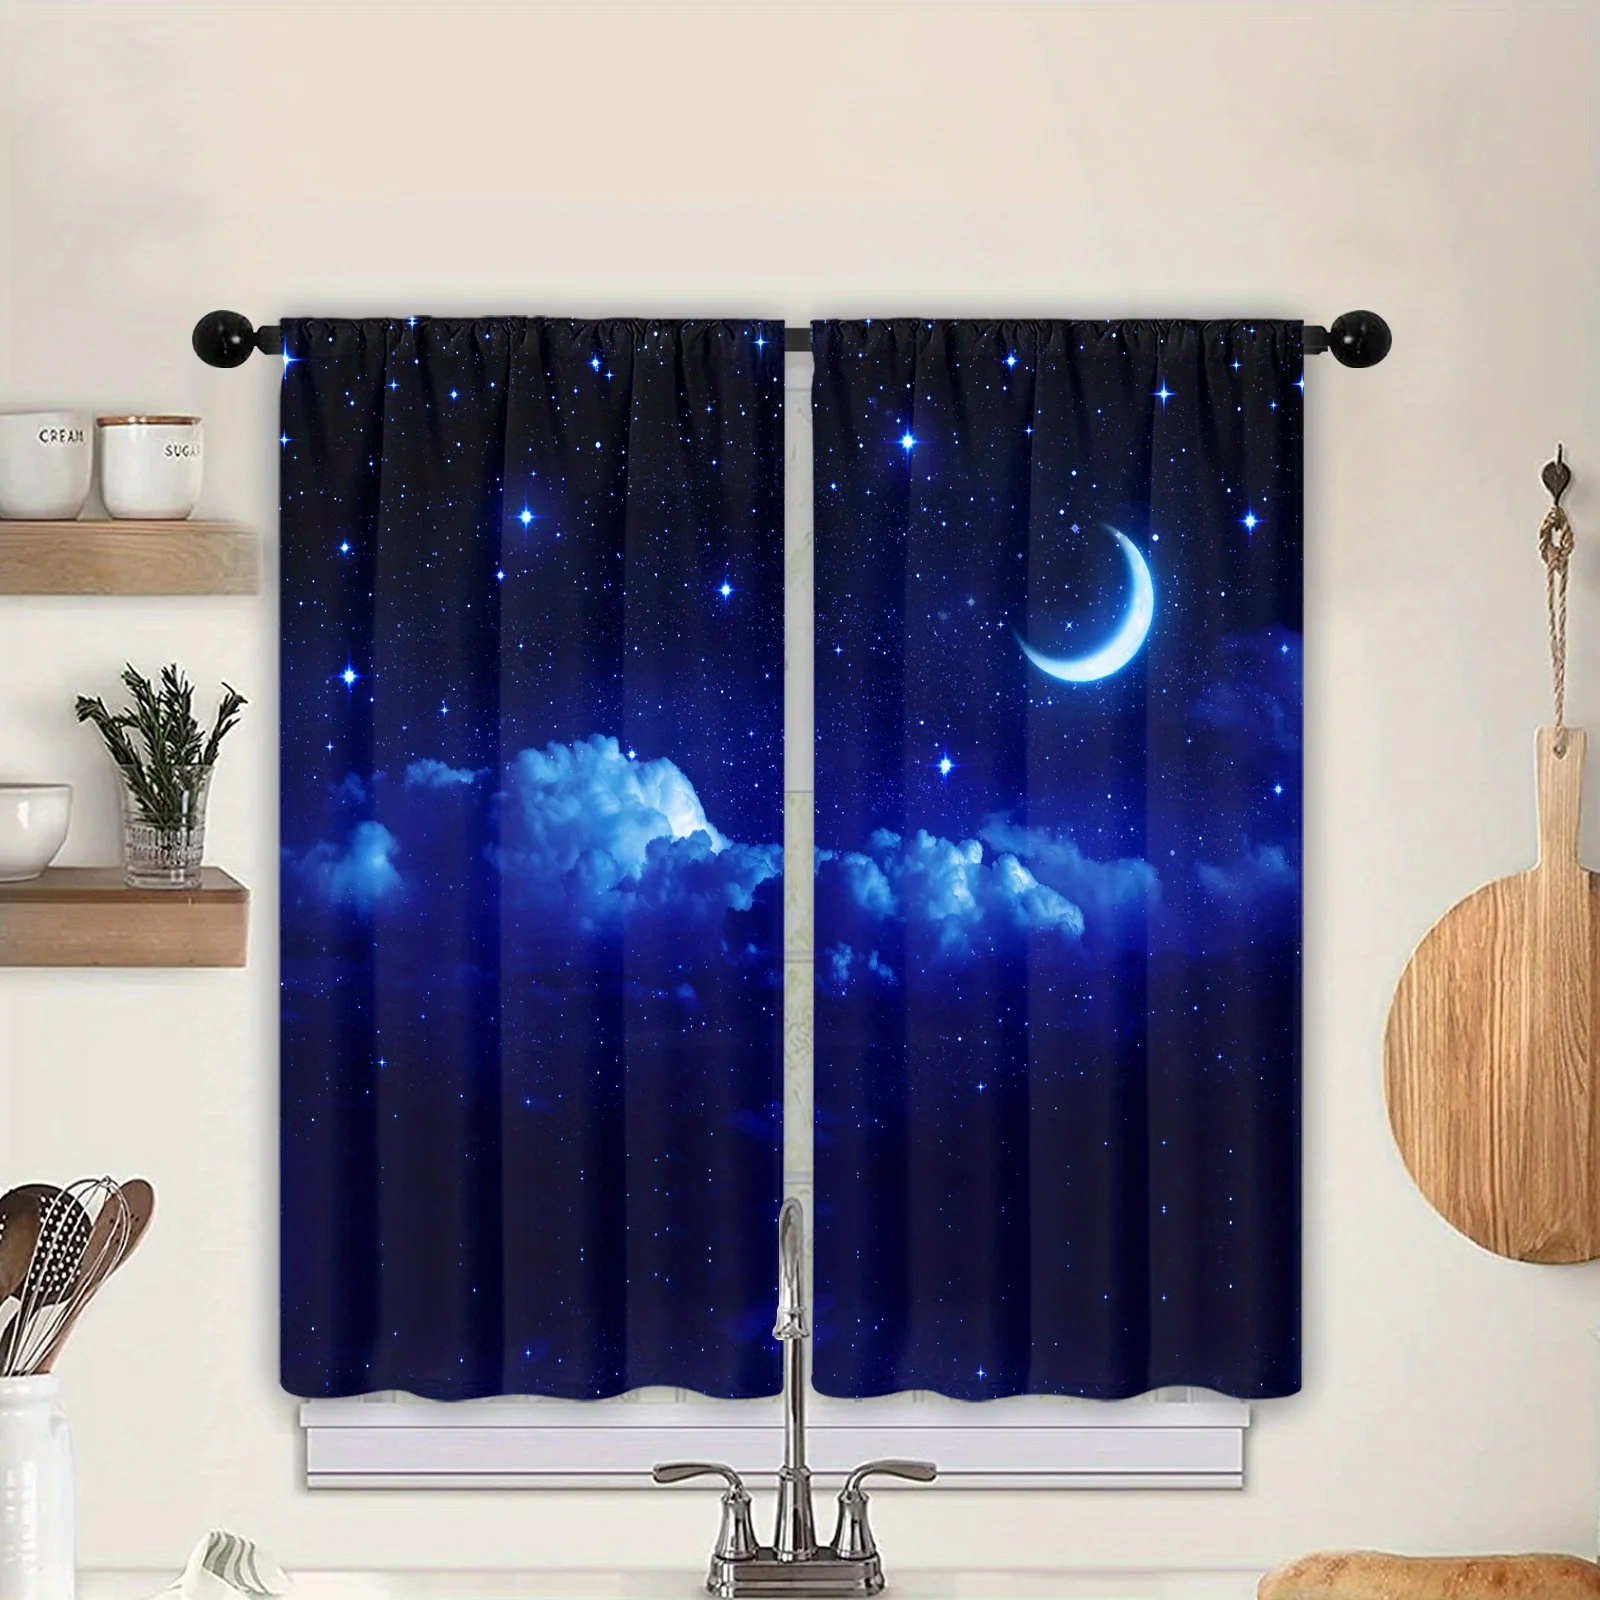 

2pcs Galaxy Window Curtains - Starry Sky Rod Pocket Drapes For Kitchen, Study, Bedroom, Living Room, Playroom Window Treatment